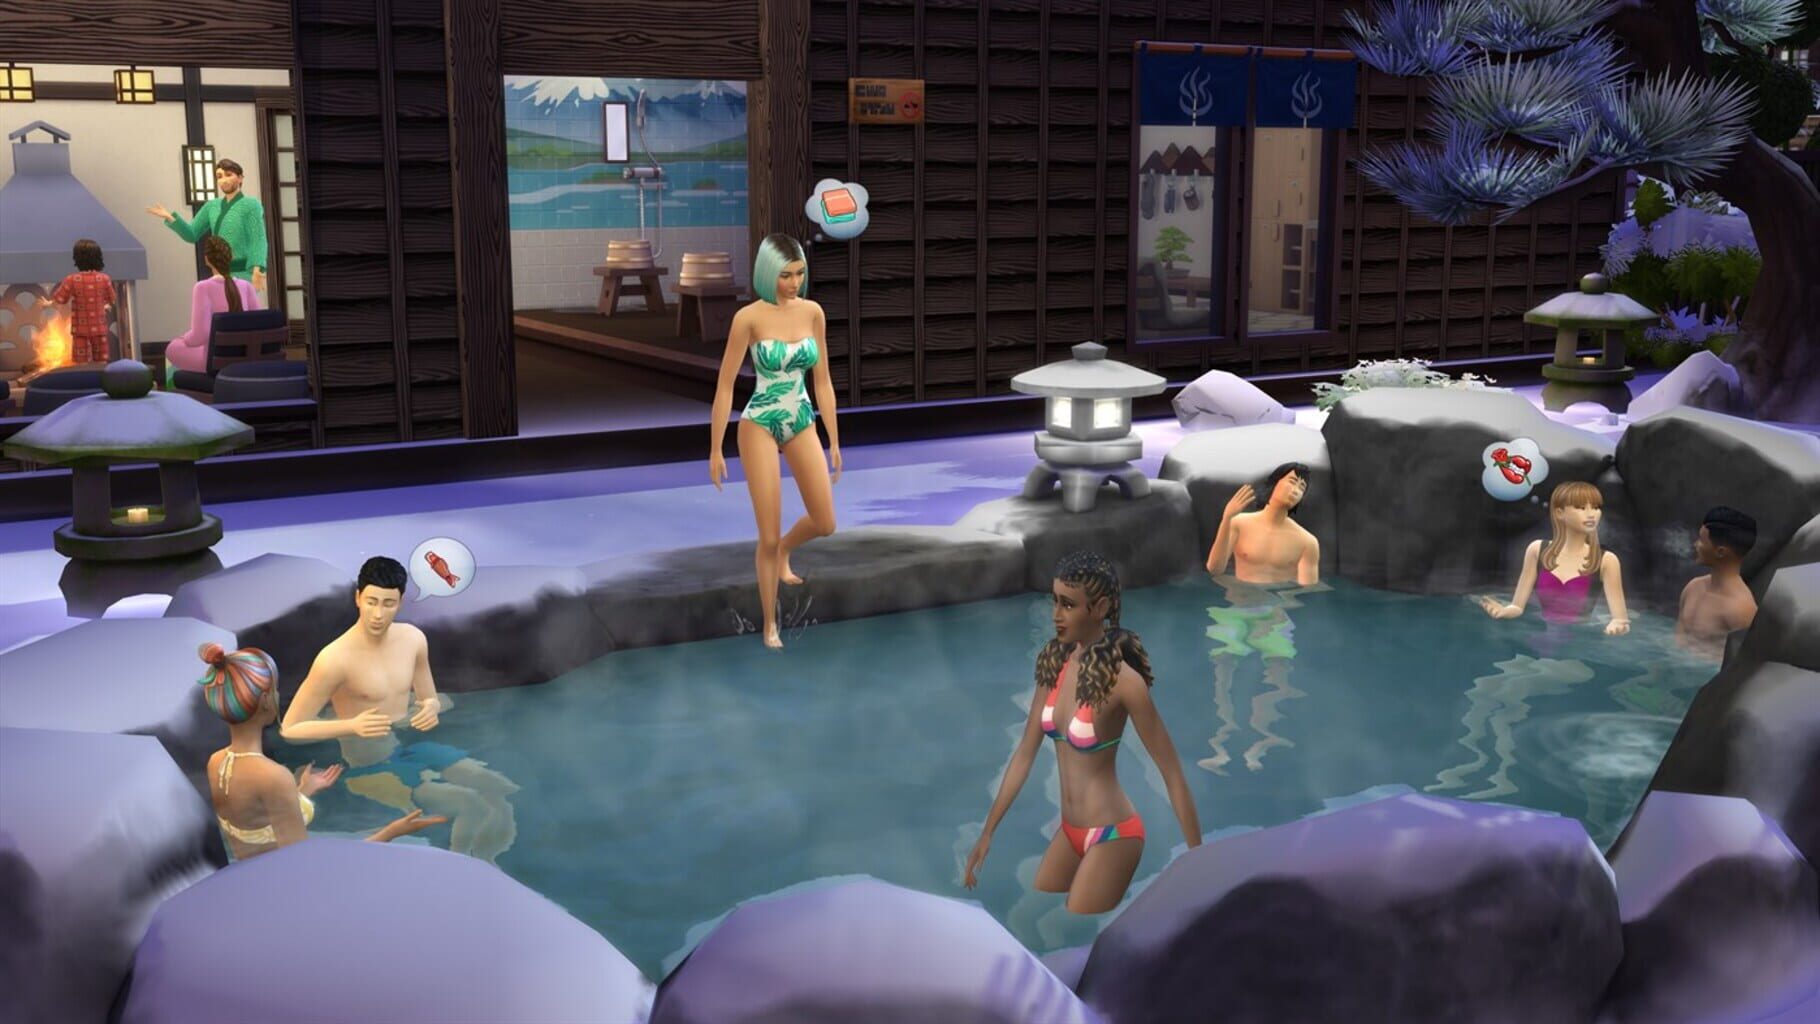 The Sims 4: Snowy Escape Image